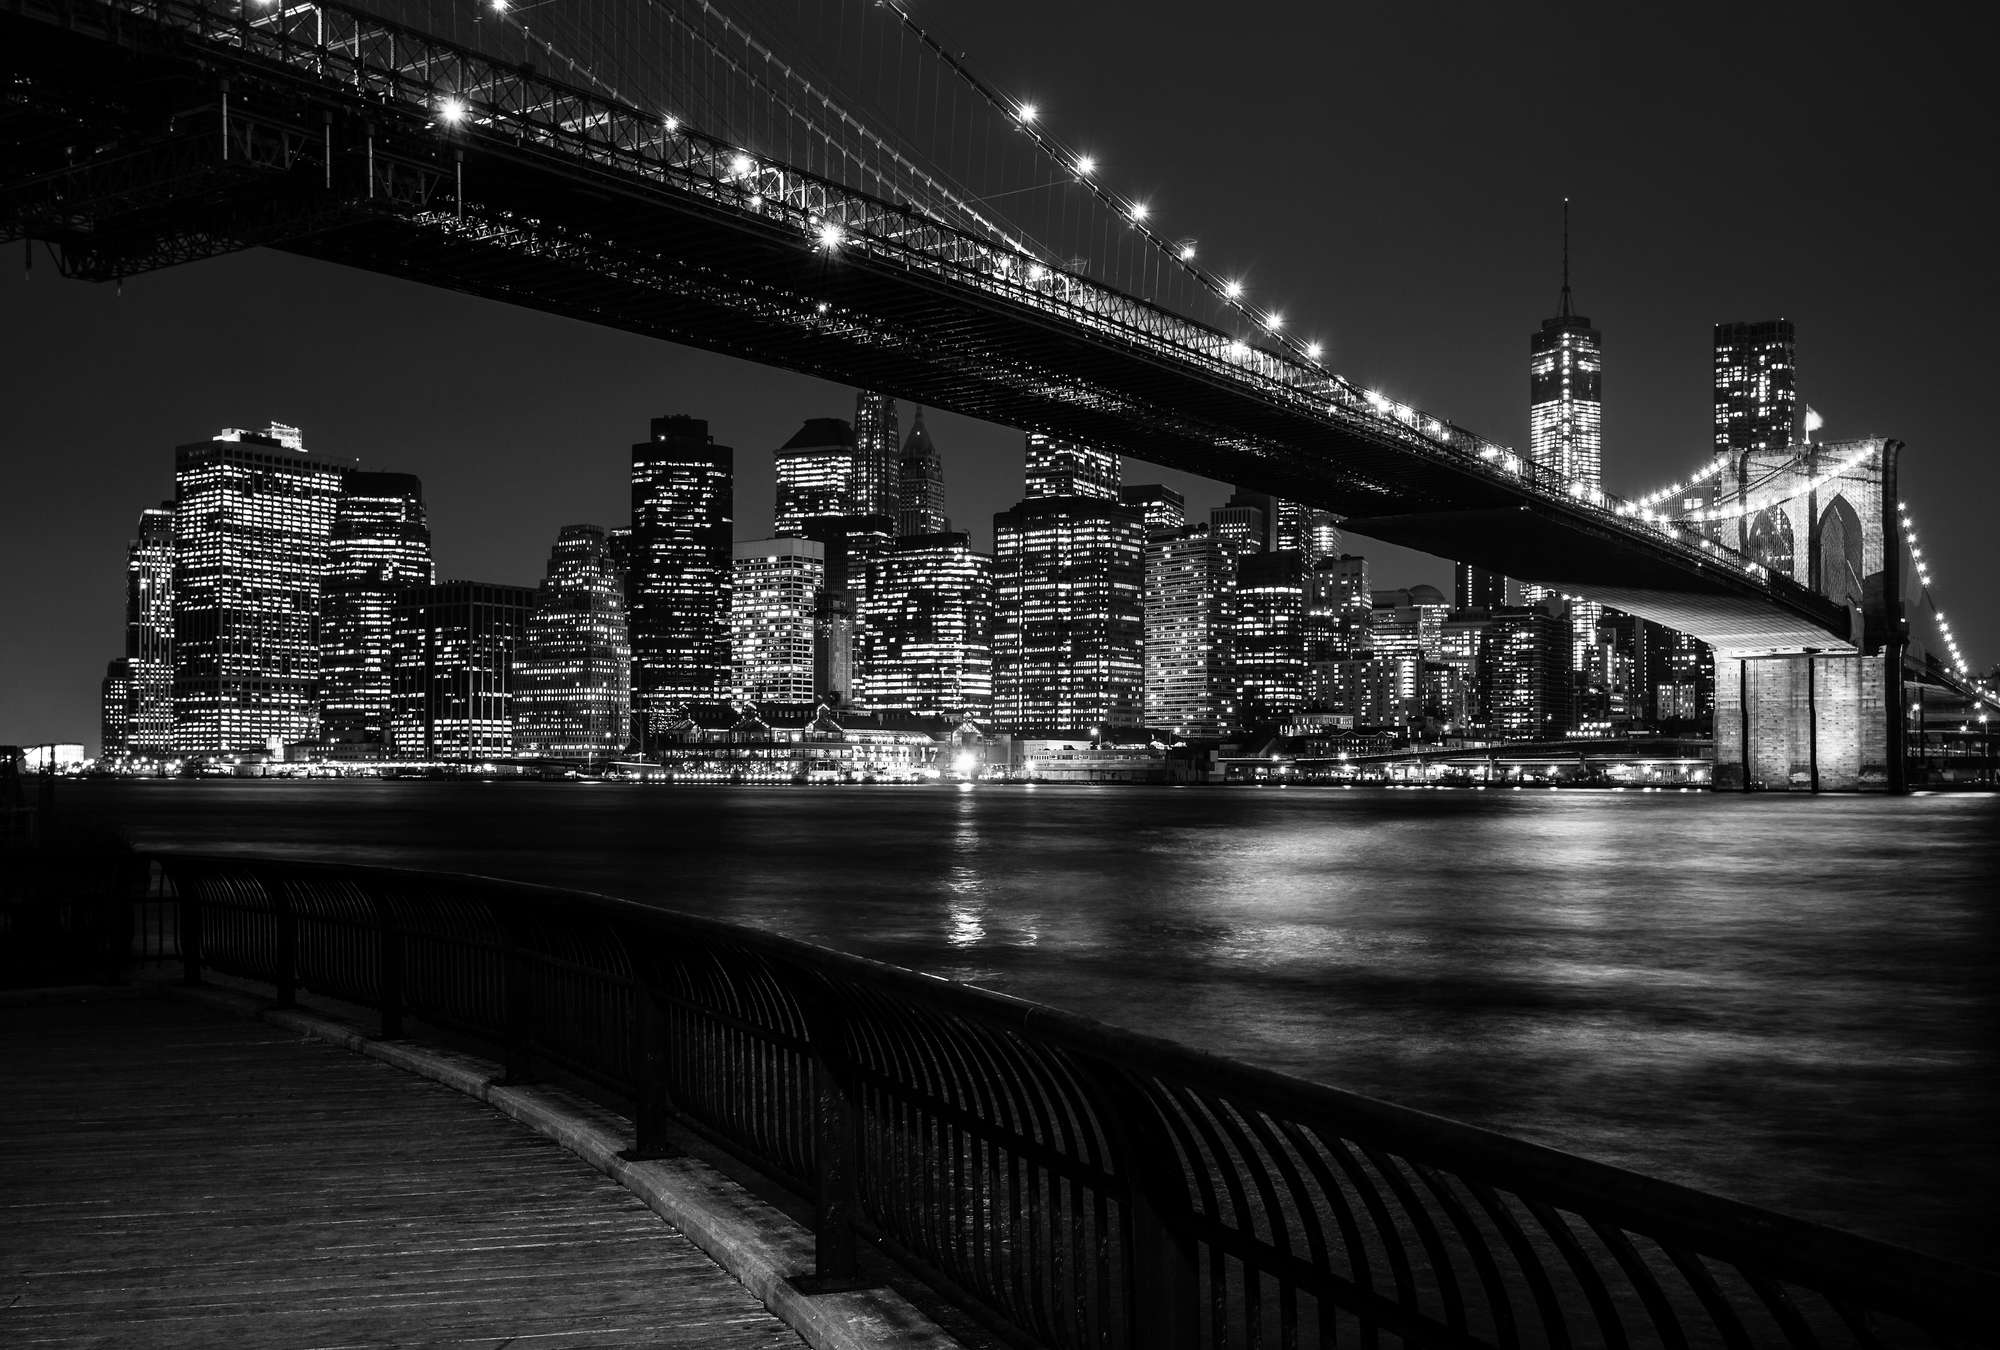             Brooklyn Bridge mural at night - black and white
        